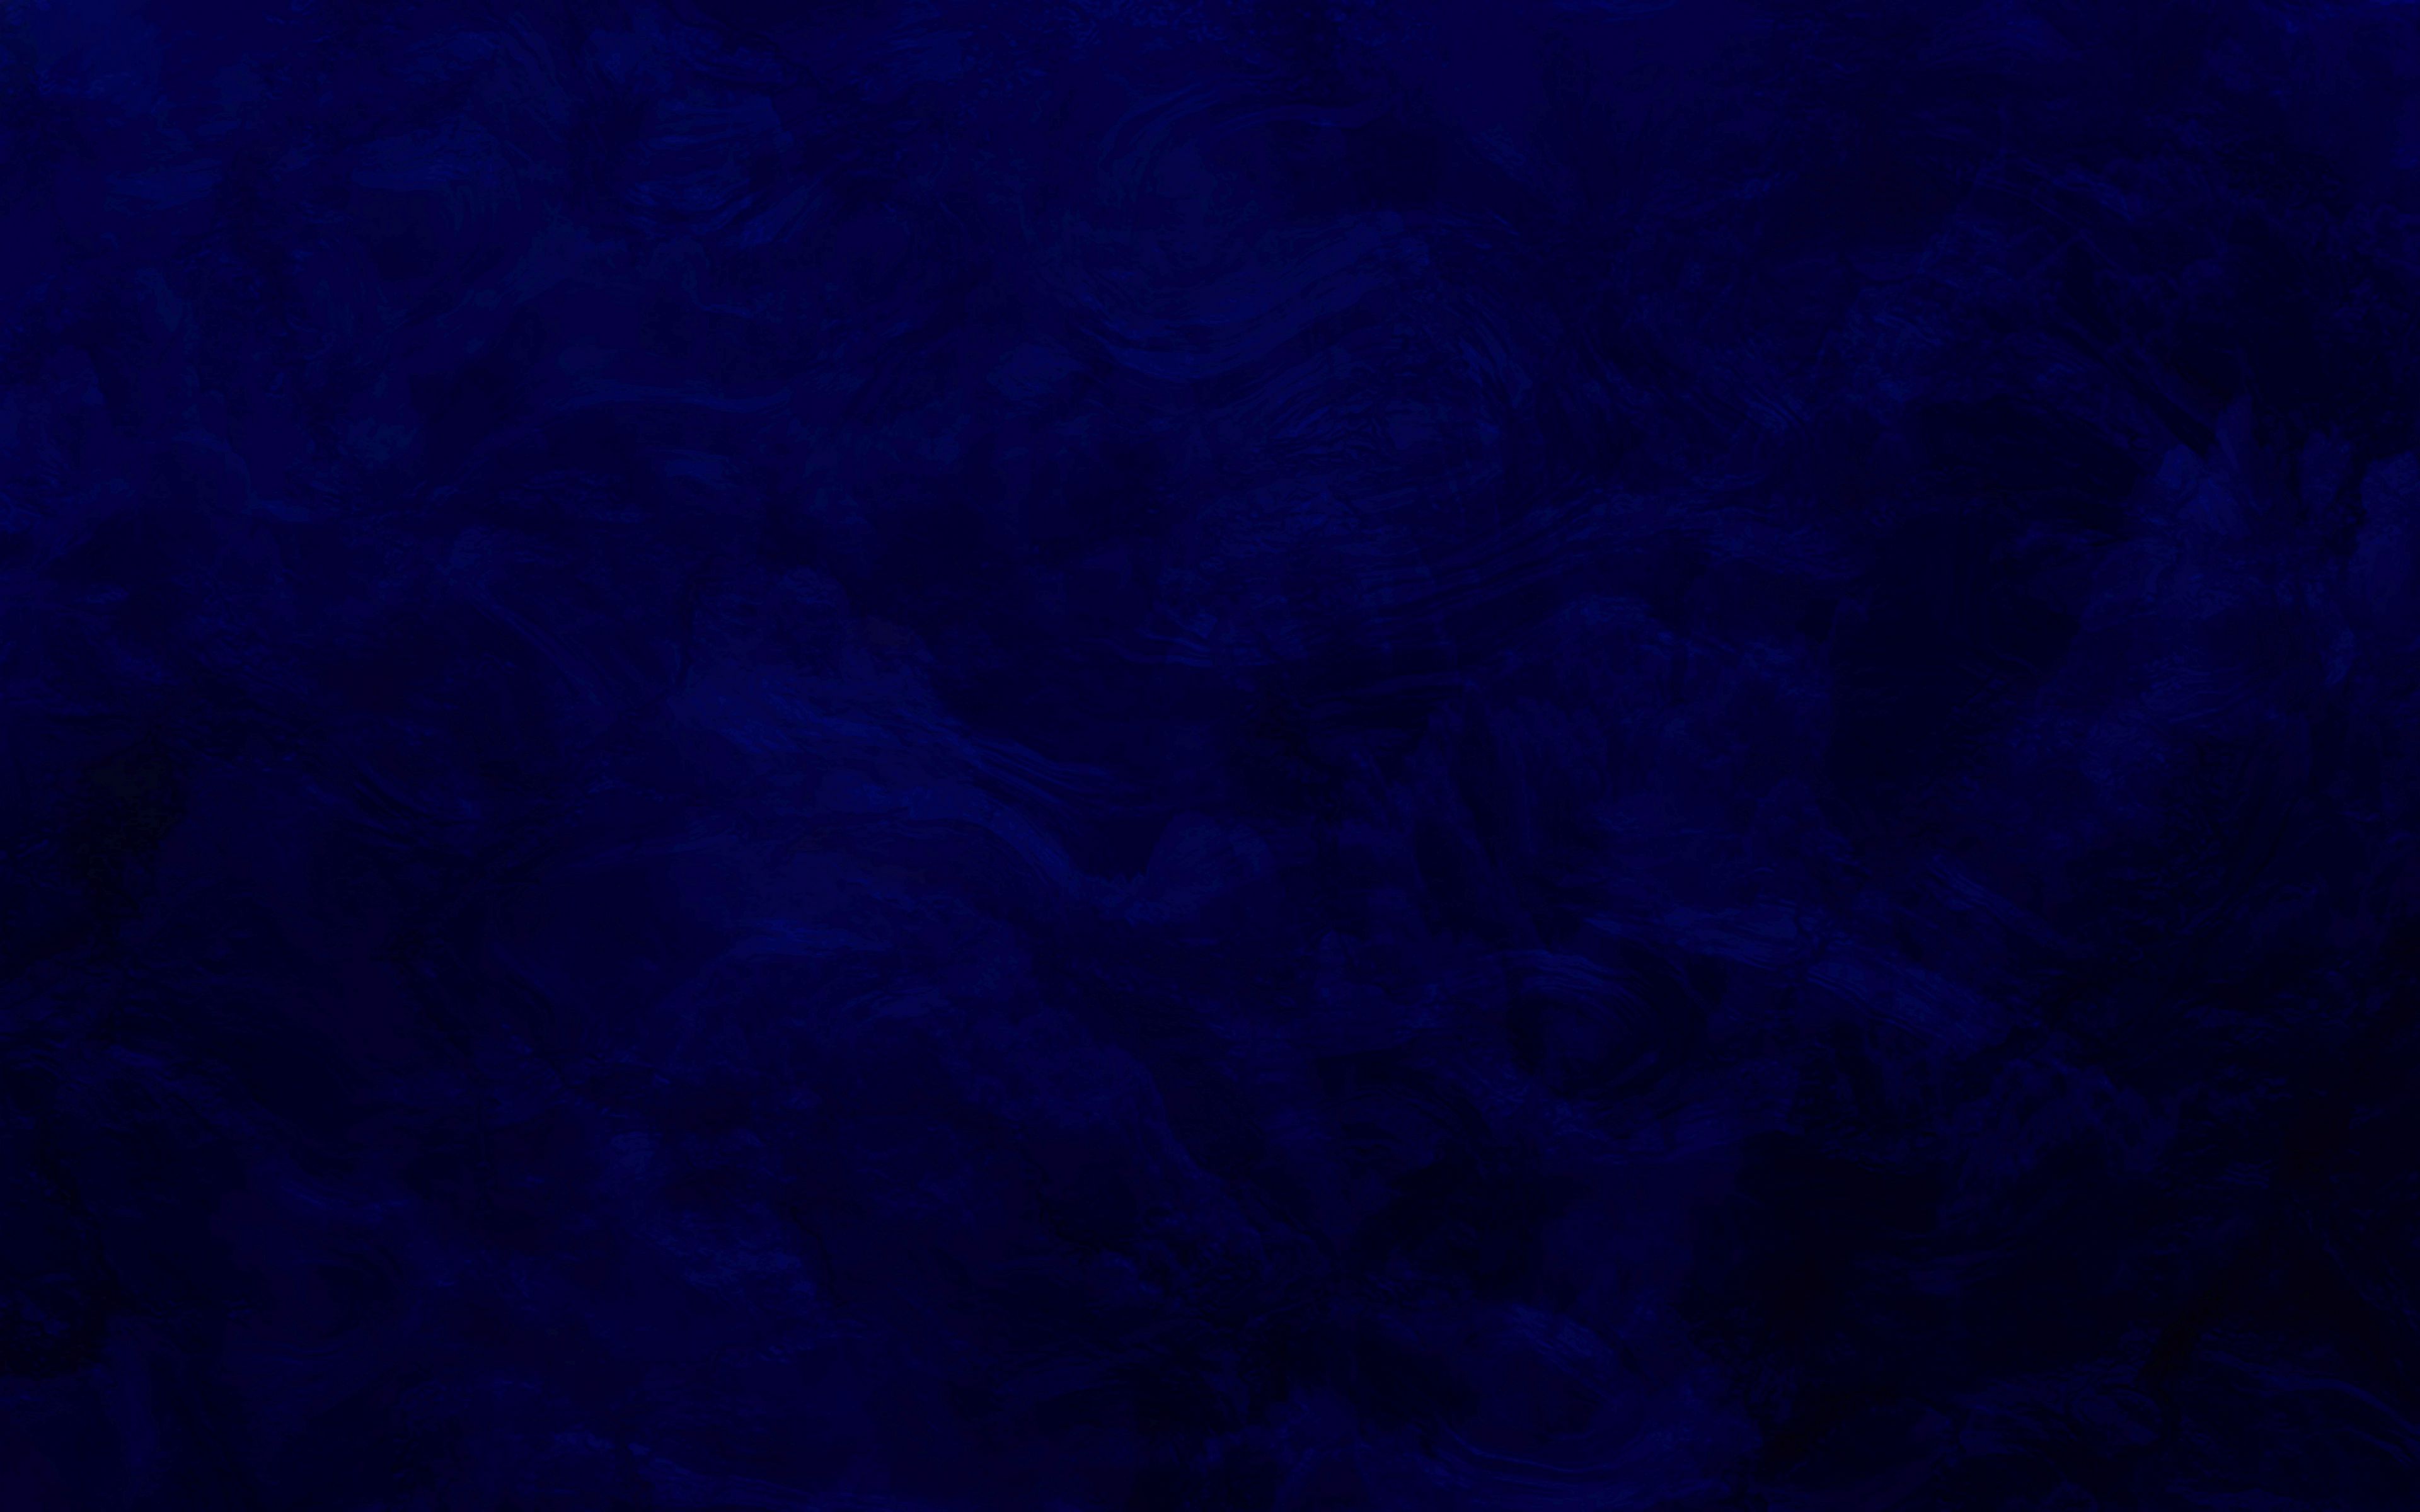 Download wallpaper 3840x2400 texture, surface, dark, blue 4k ultra hd 16:10  hd background